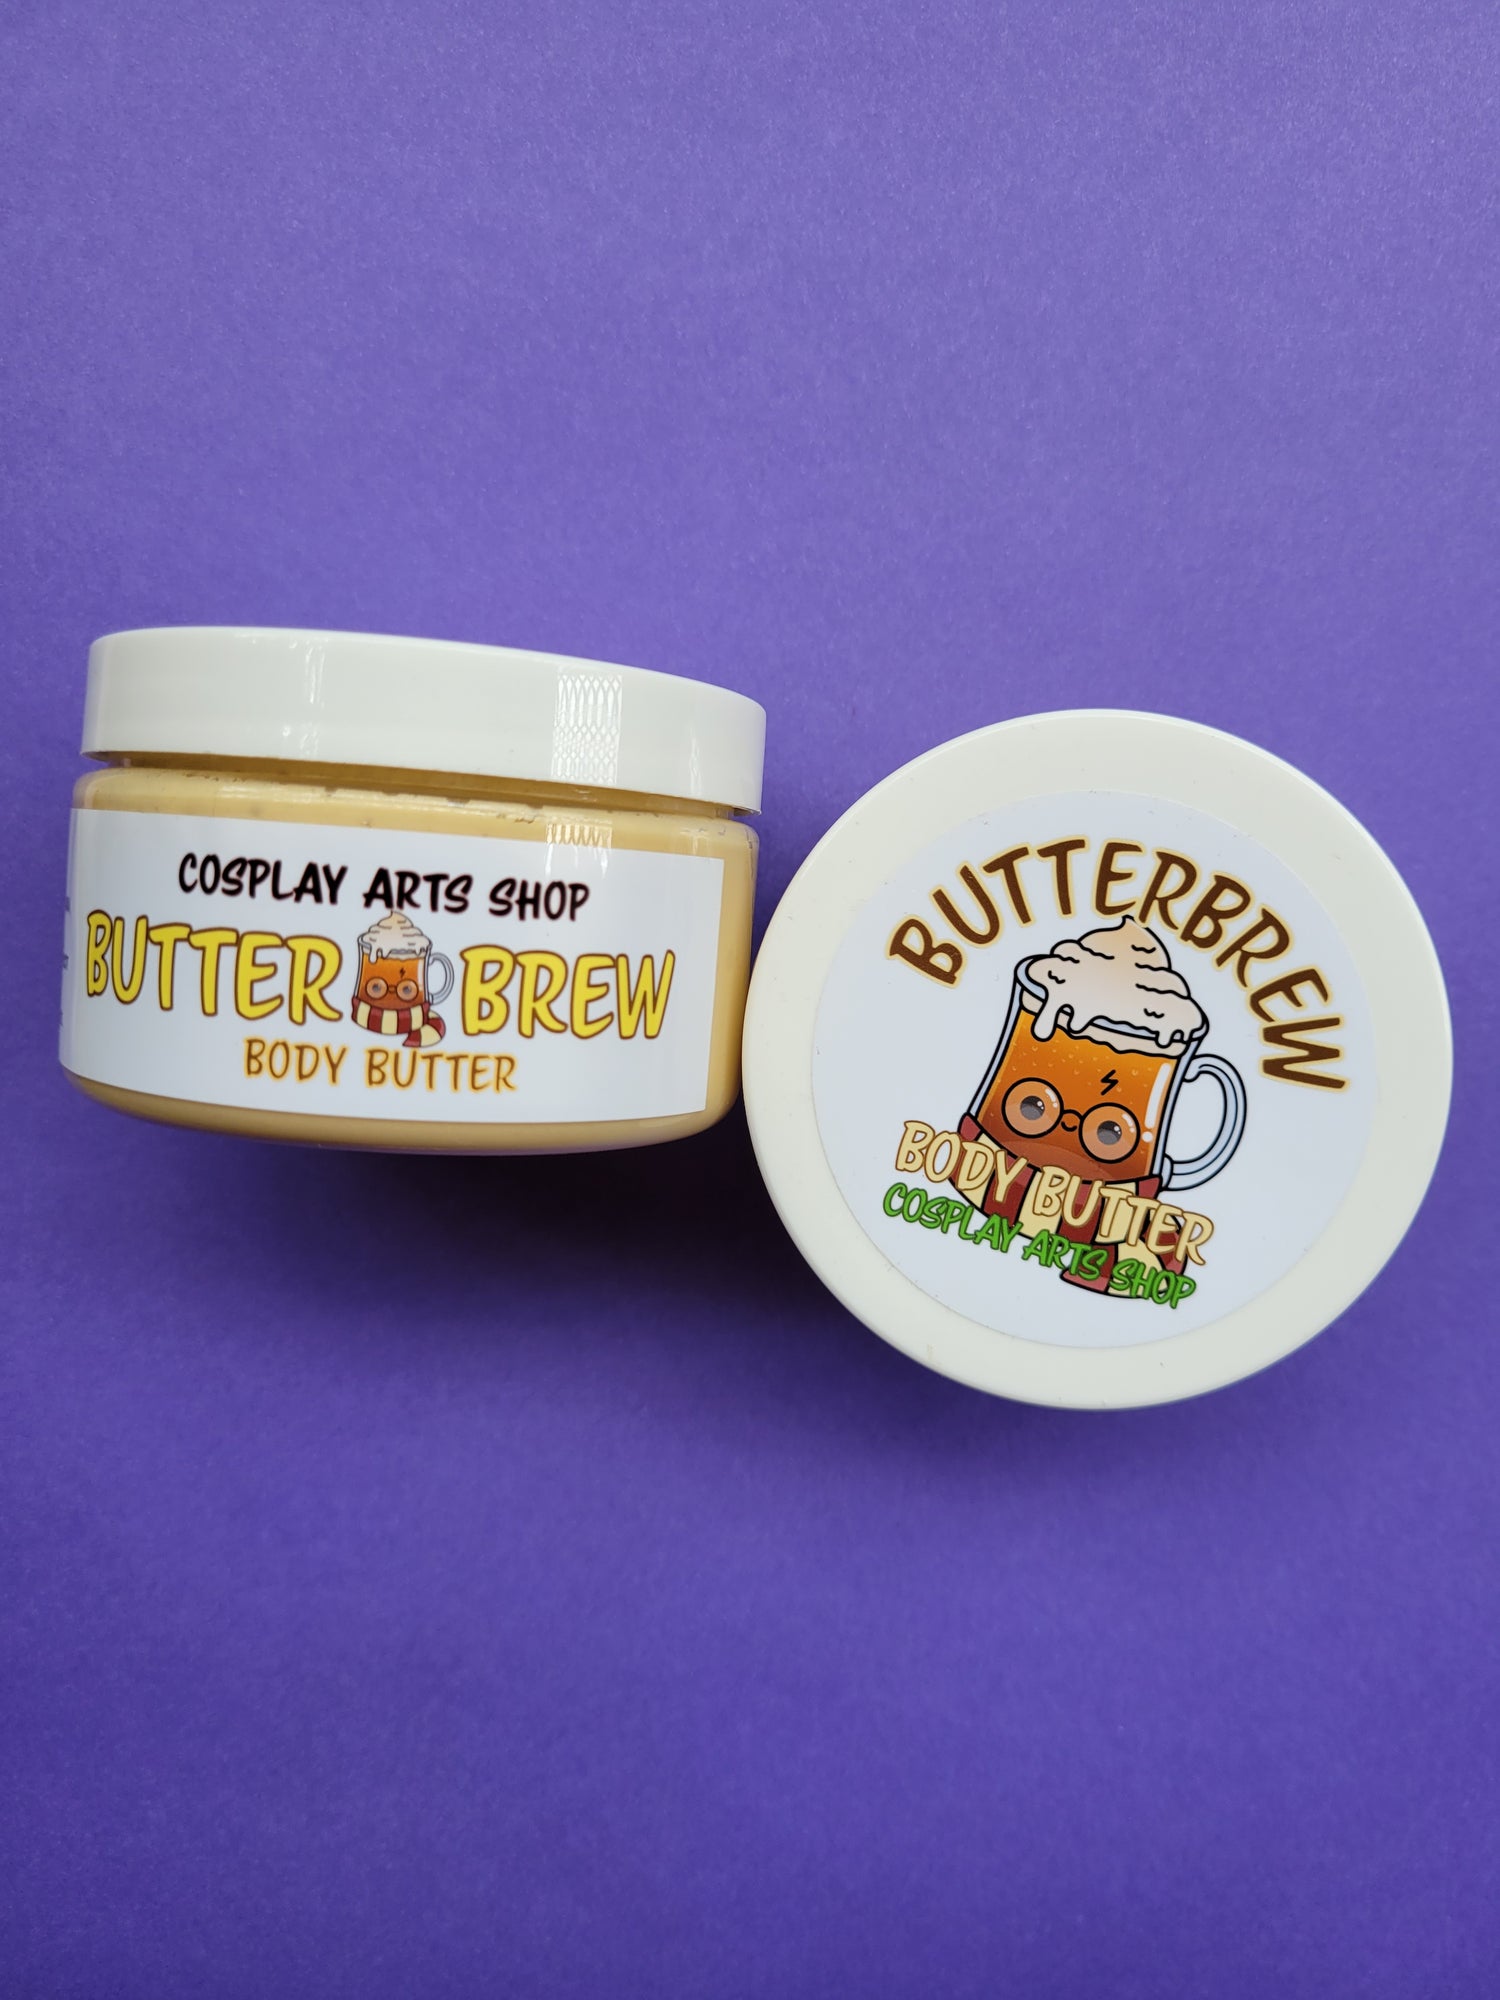 ButterBrew Body Butter - Cosplay Arts Shop